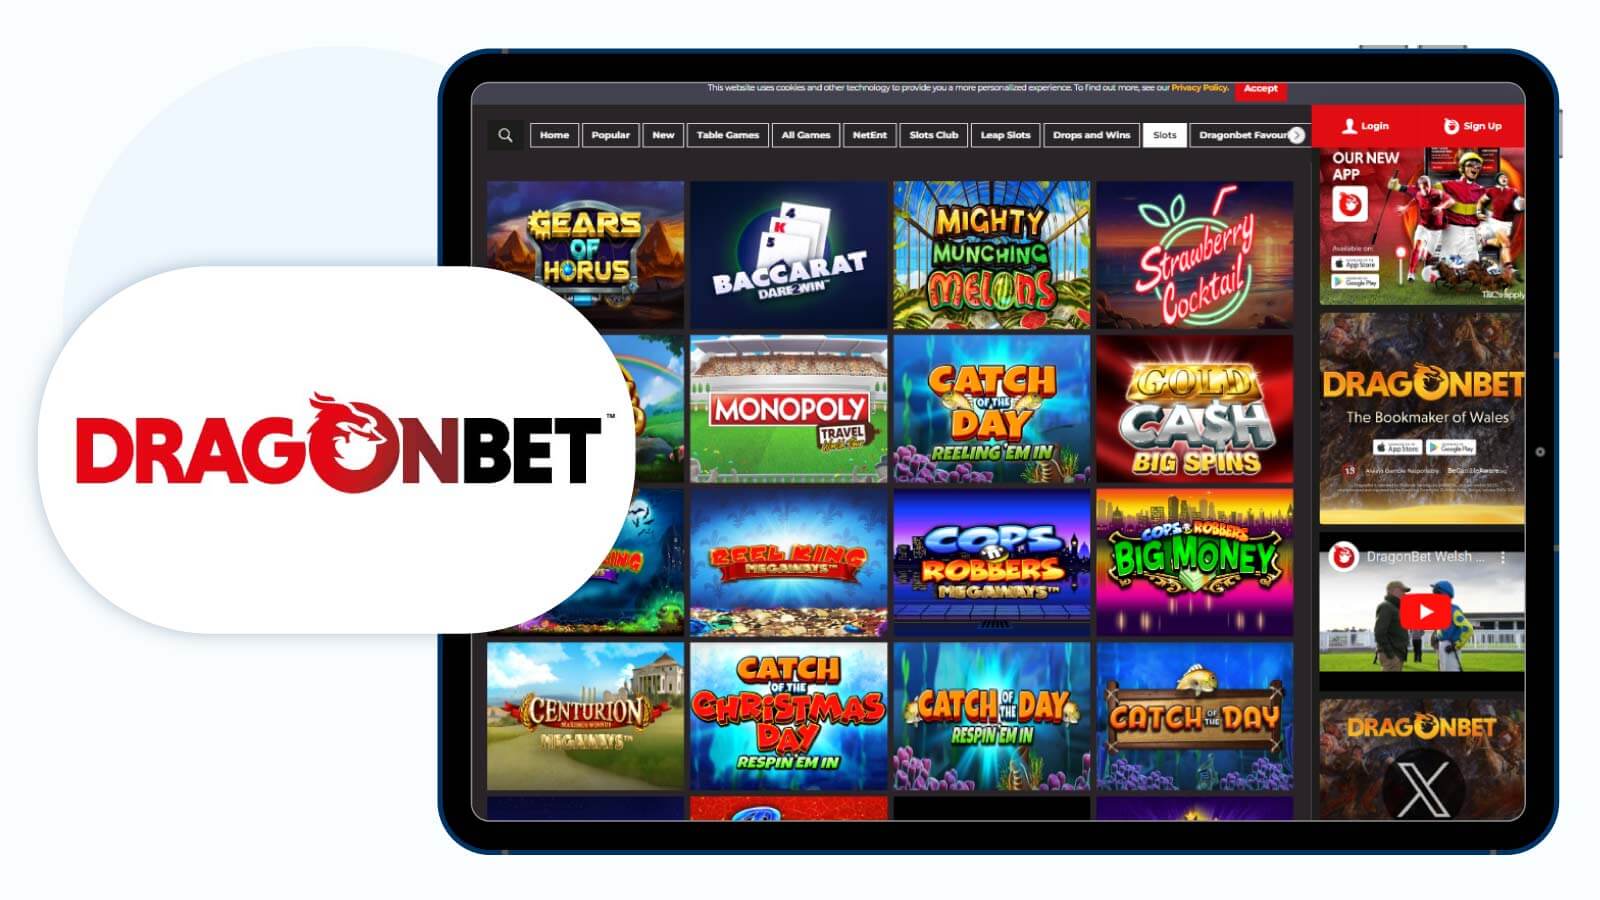 Dragonbet-Newest-No-Wagering-Free-Spins-UK-Casino